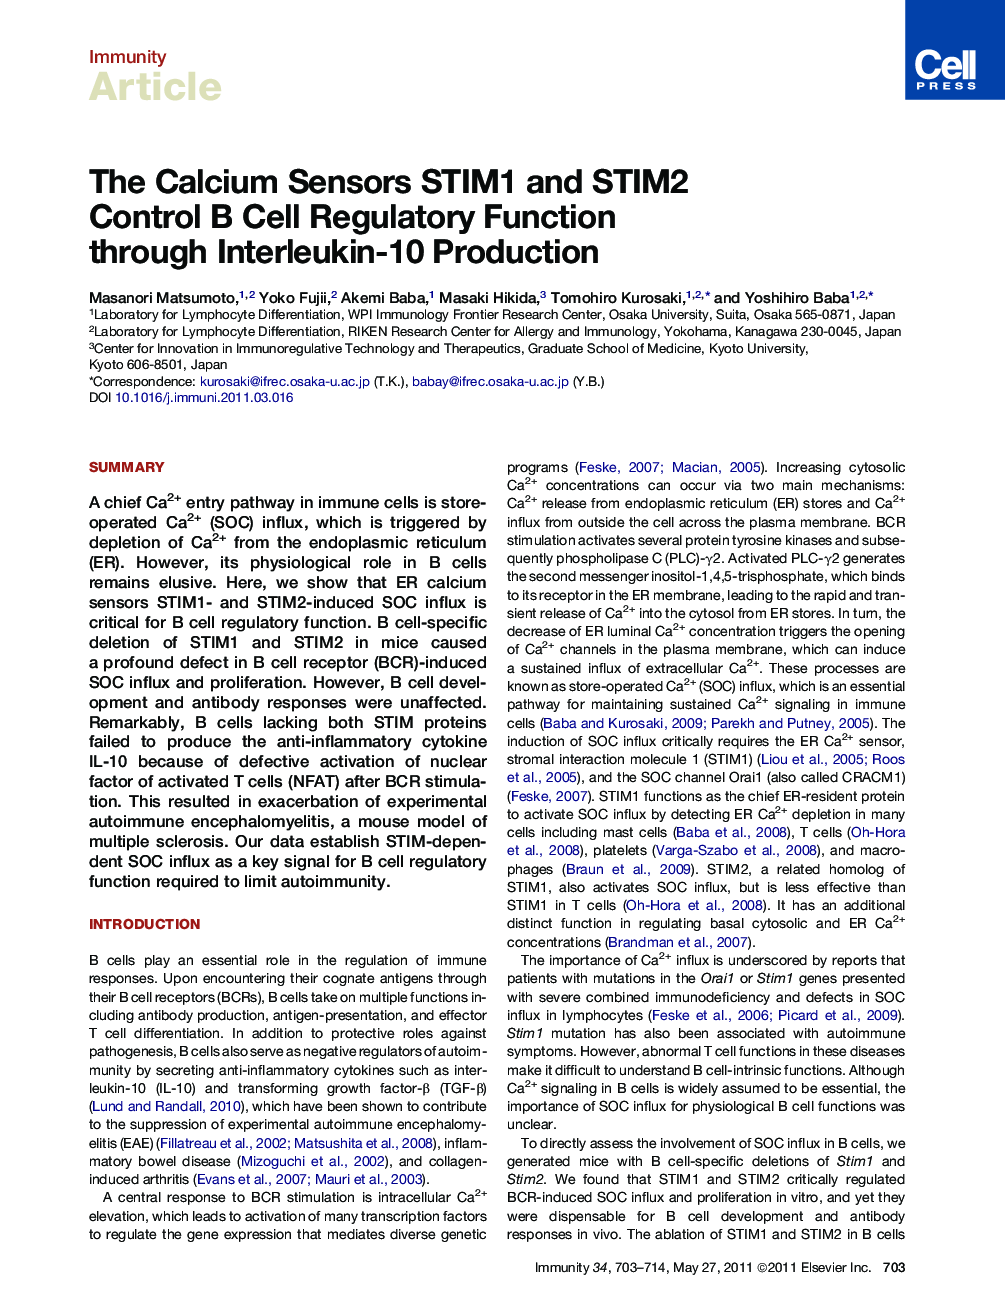 The Calcium Sensors STIM1 and STIM2 Control B Cell Regulatory Function through Interleukin-10 Production